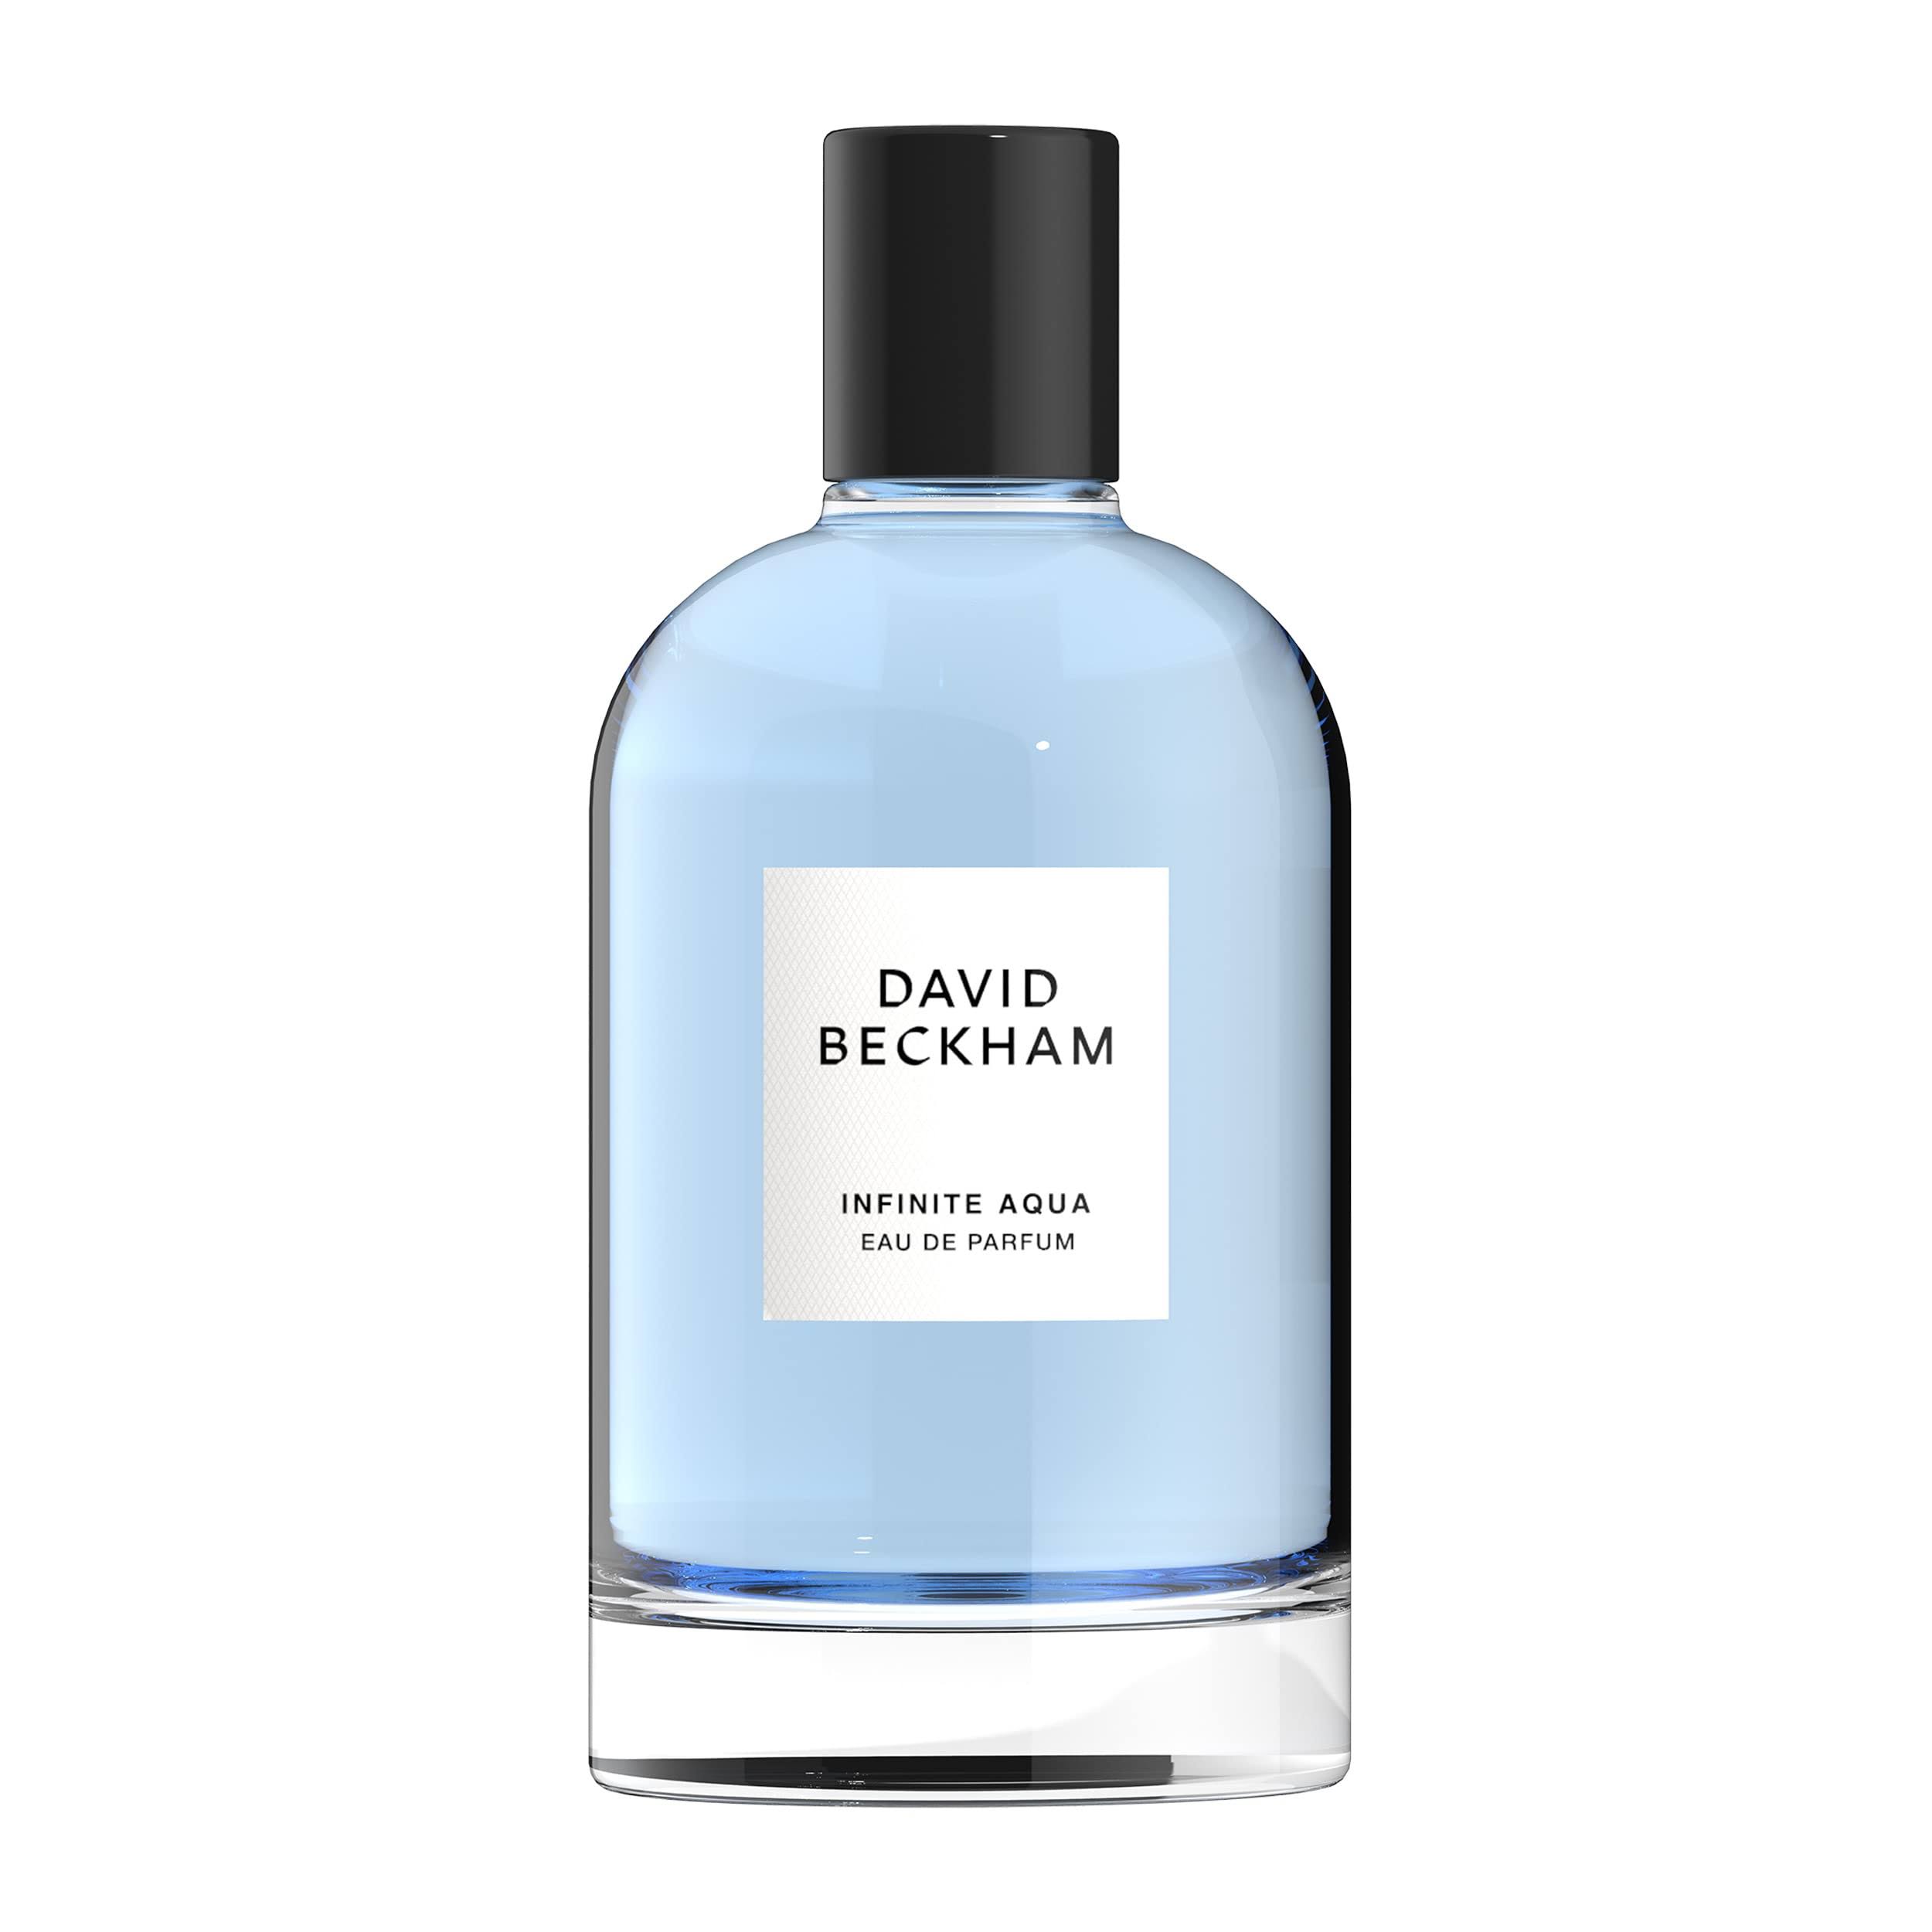 David Beckham Collection Infinite Aqua Eau de Parfum 100ml